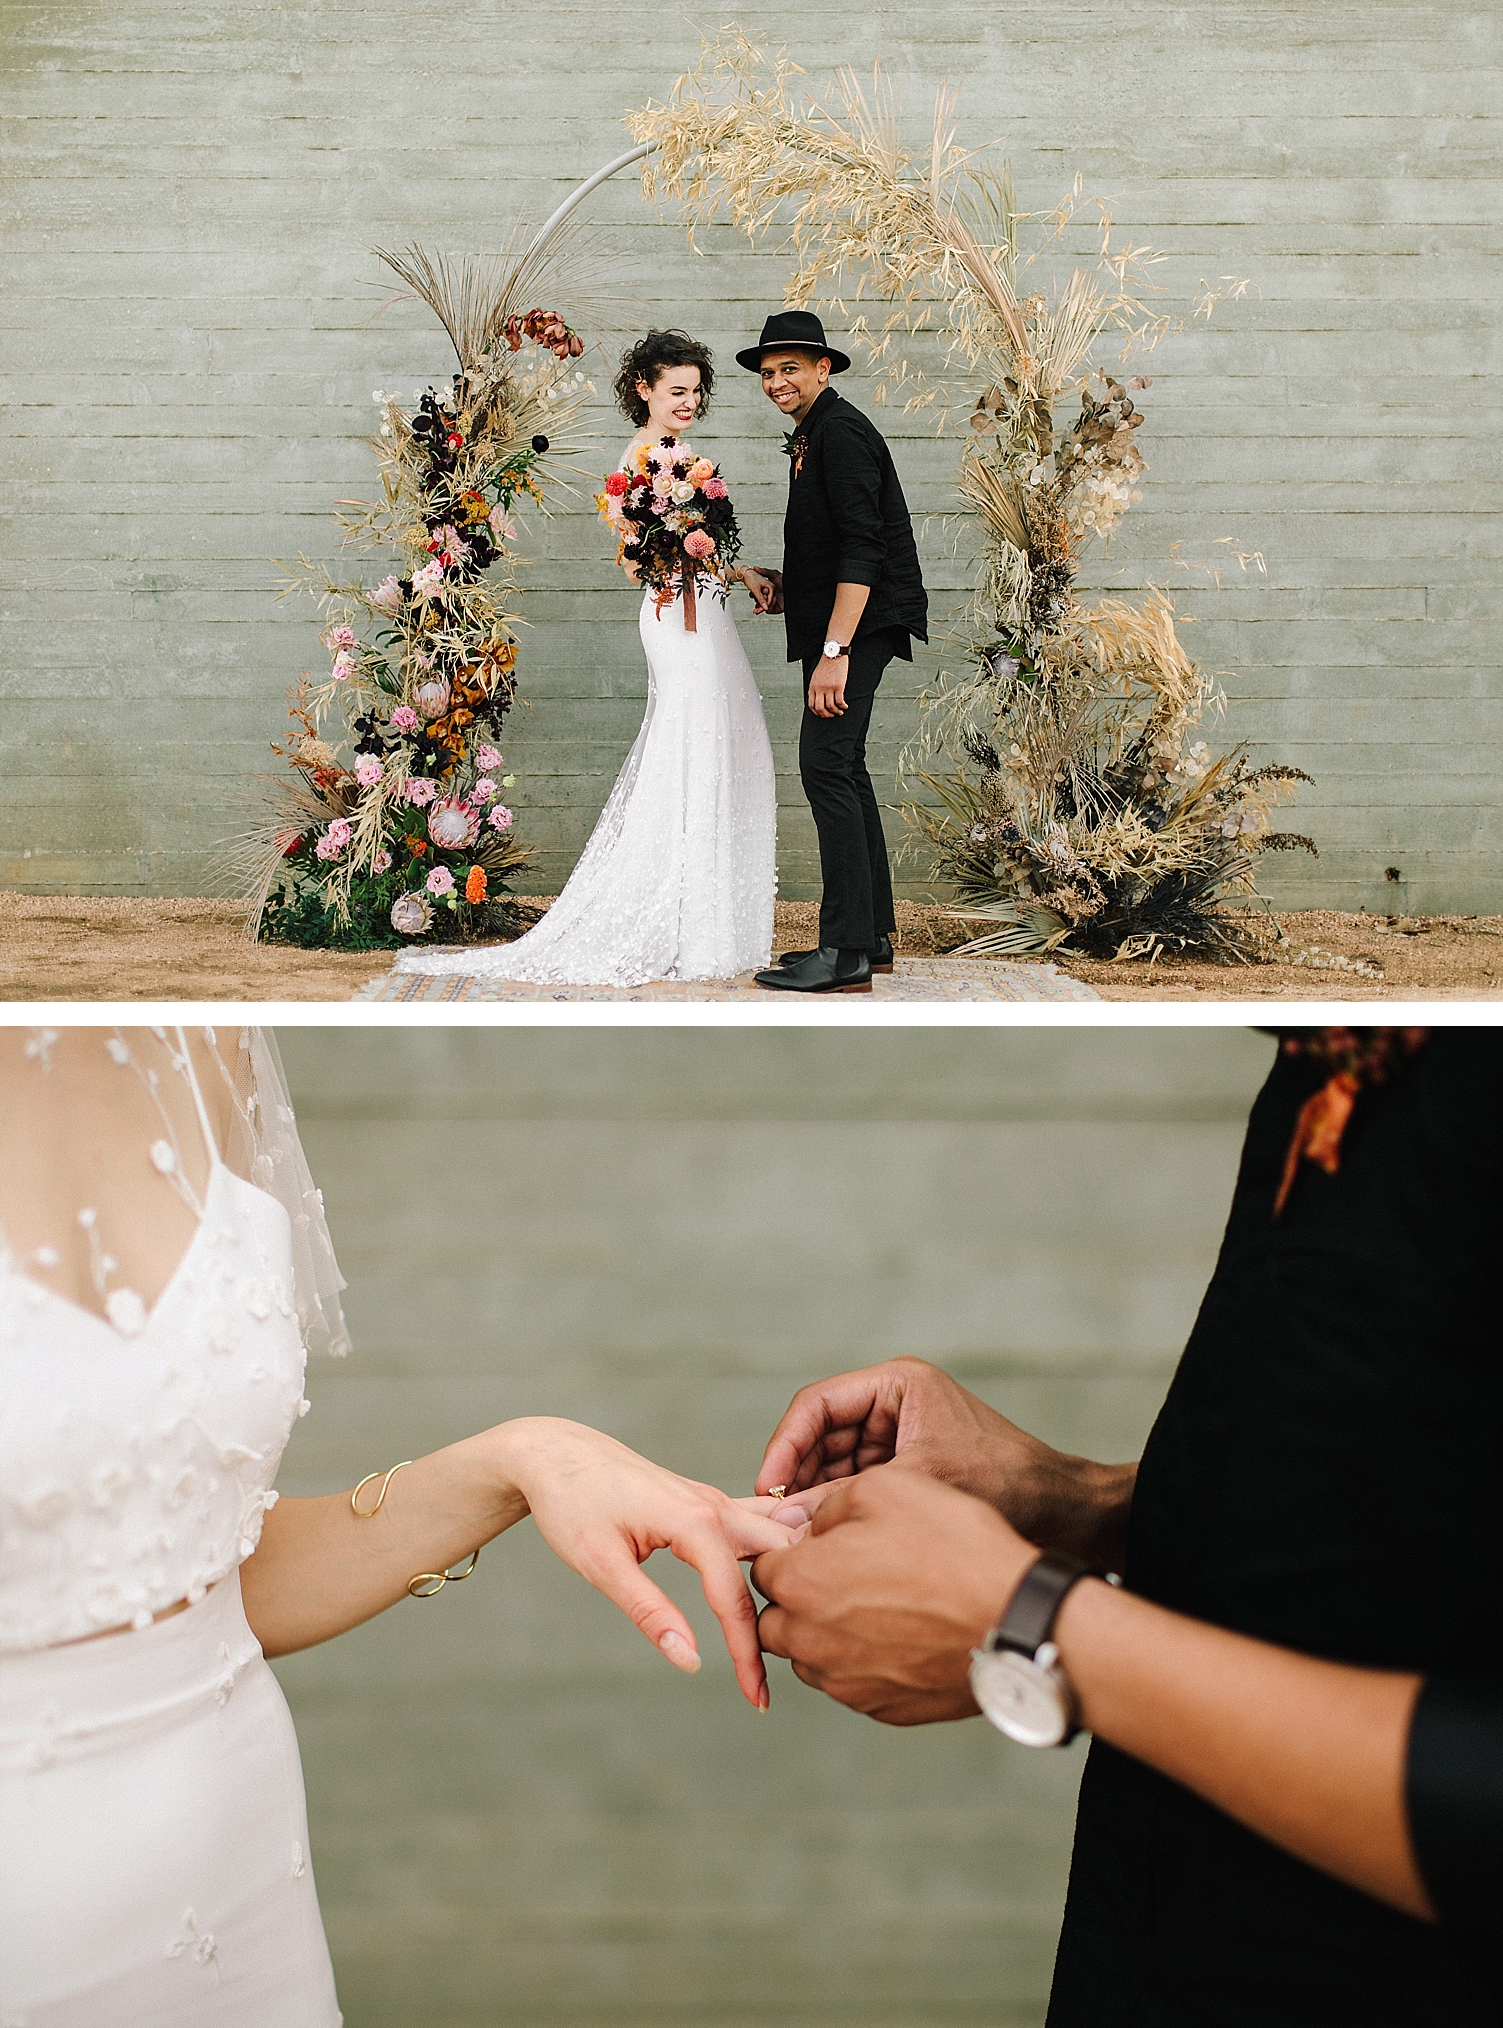 Fall Wedding Inspiration at Dallas' Trinity River Audubon Center